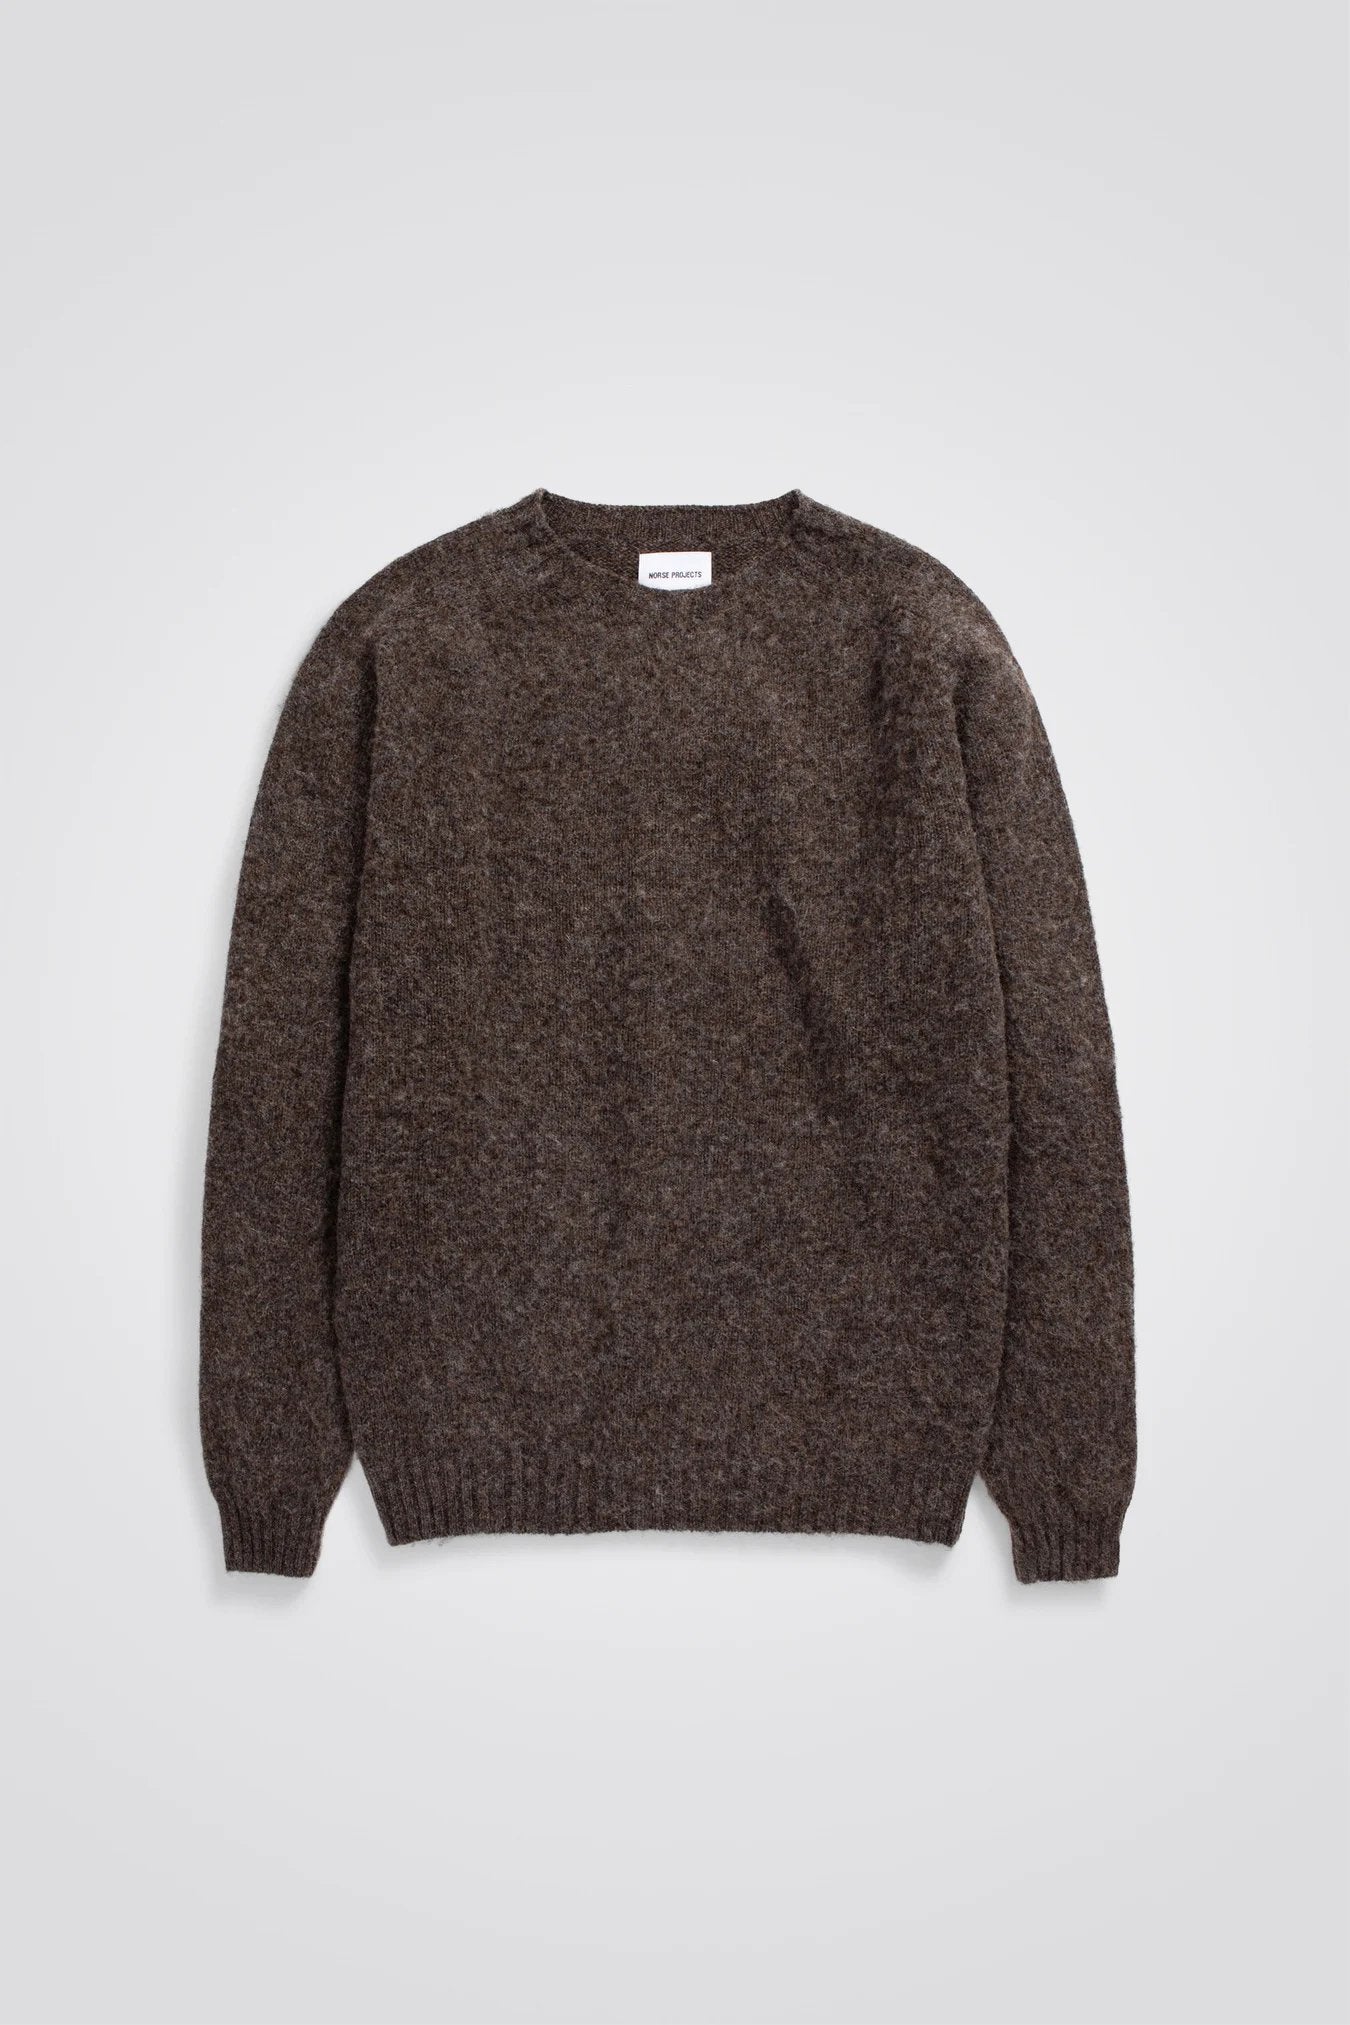 Birnir Brushed Lambswool Sweater - Norse Projects - Danali - N45-0520-WarmGrey-M